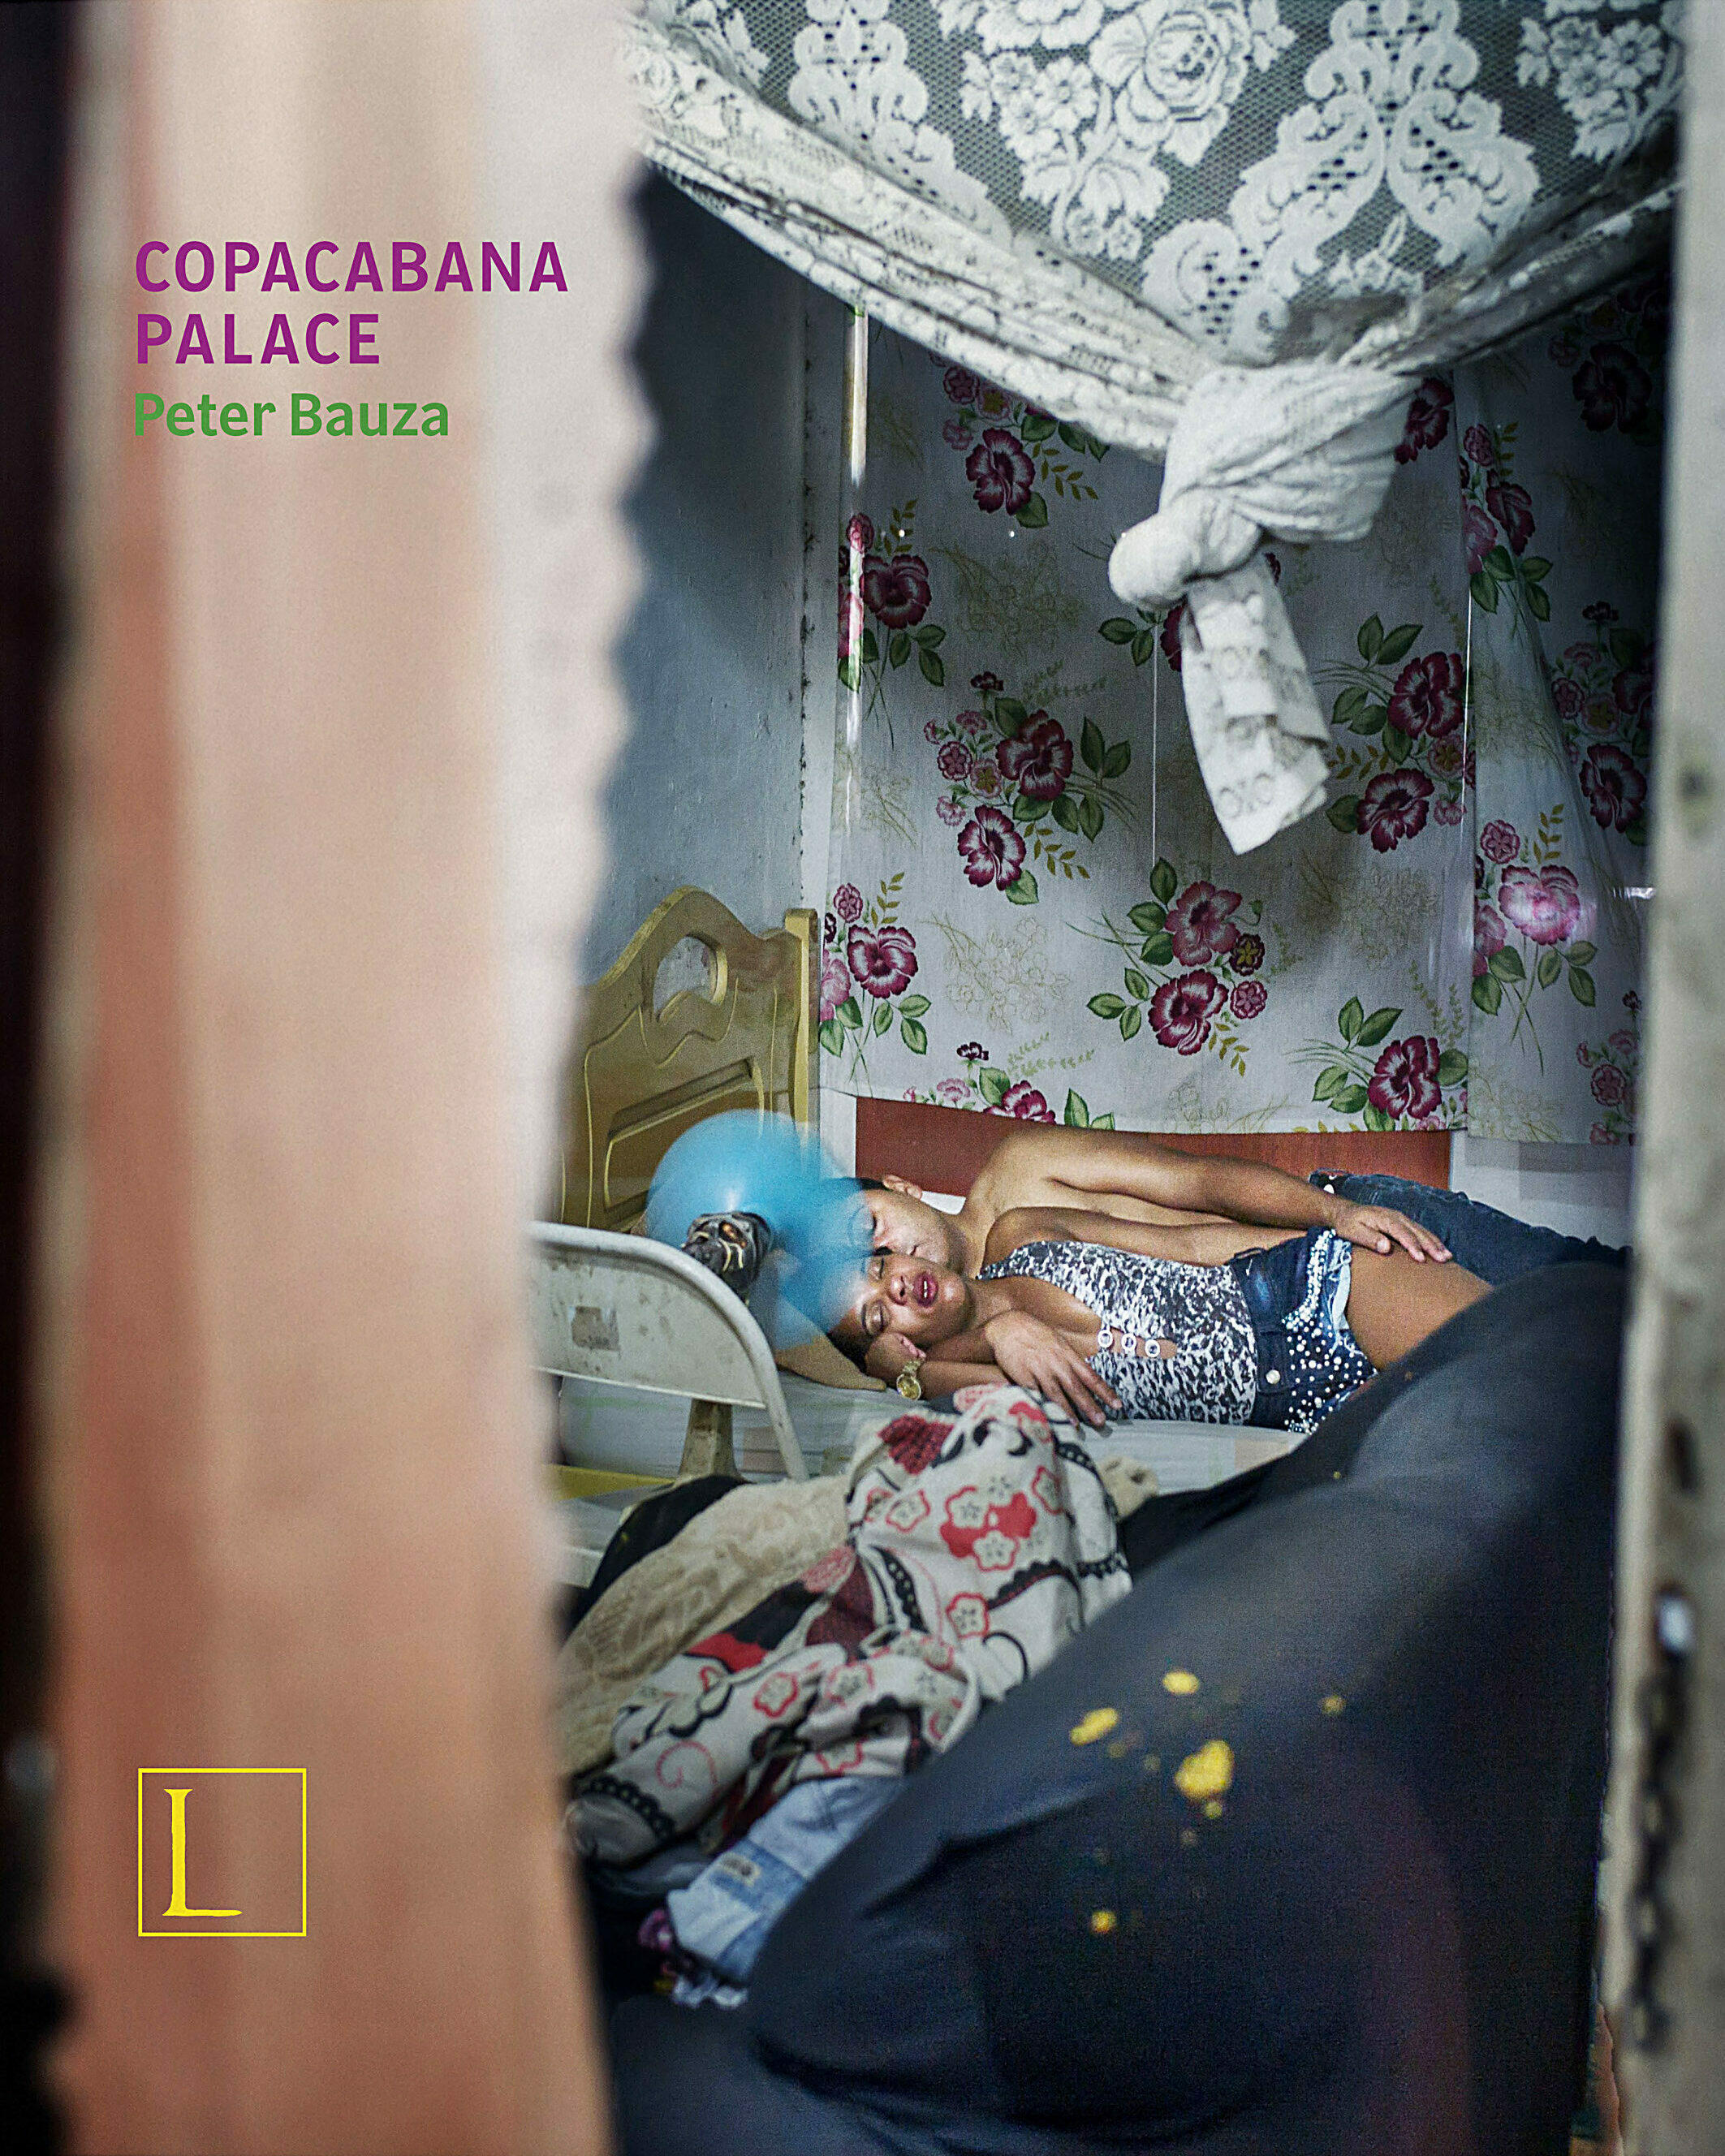 copacabana palace, peter bauza, kunstbuch bildband fotobuch